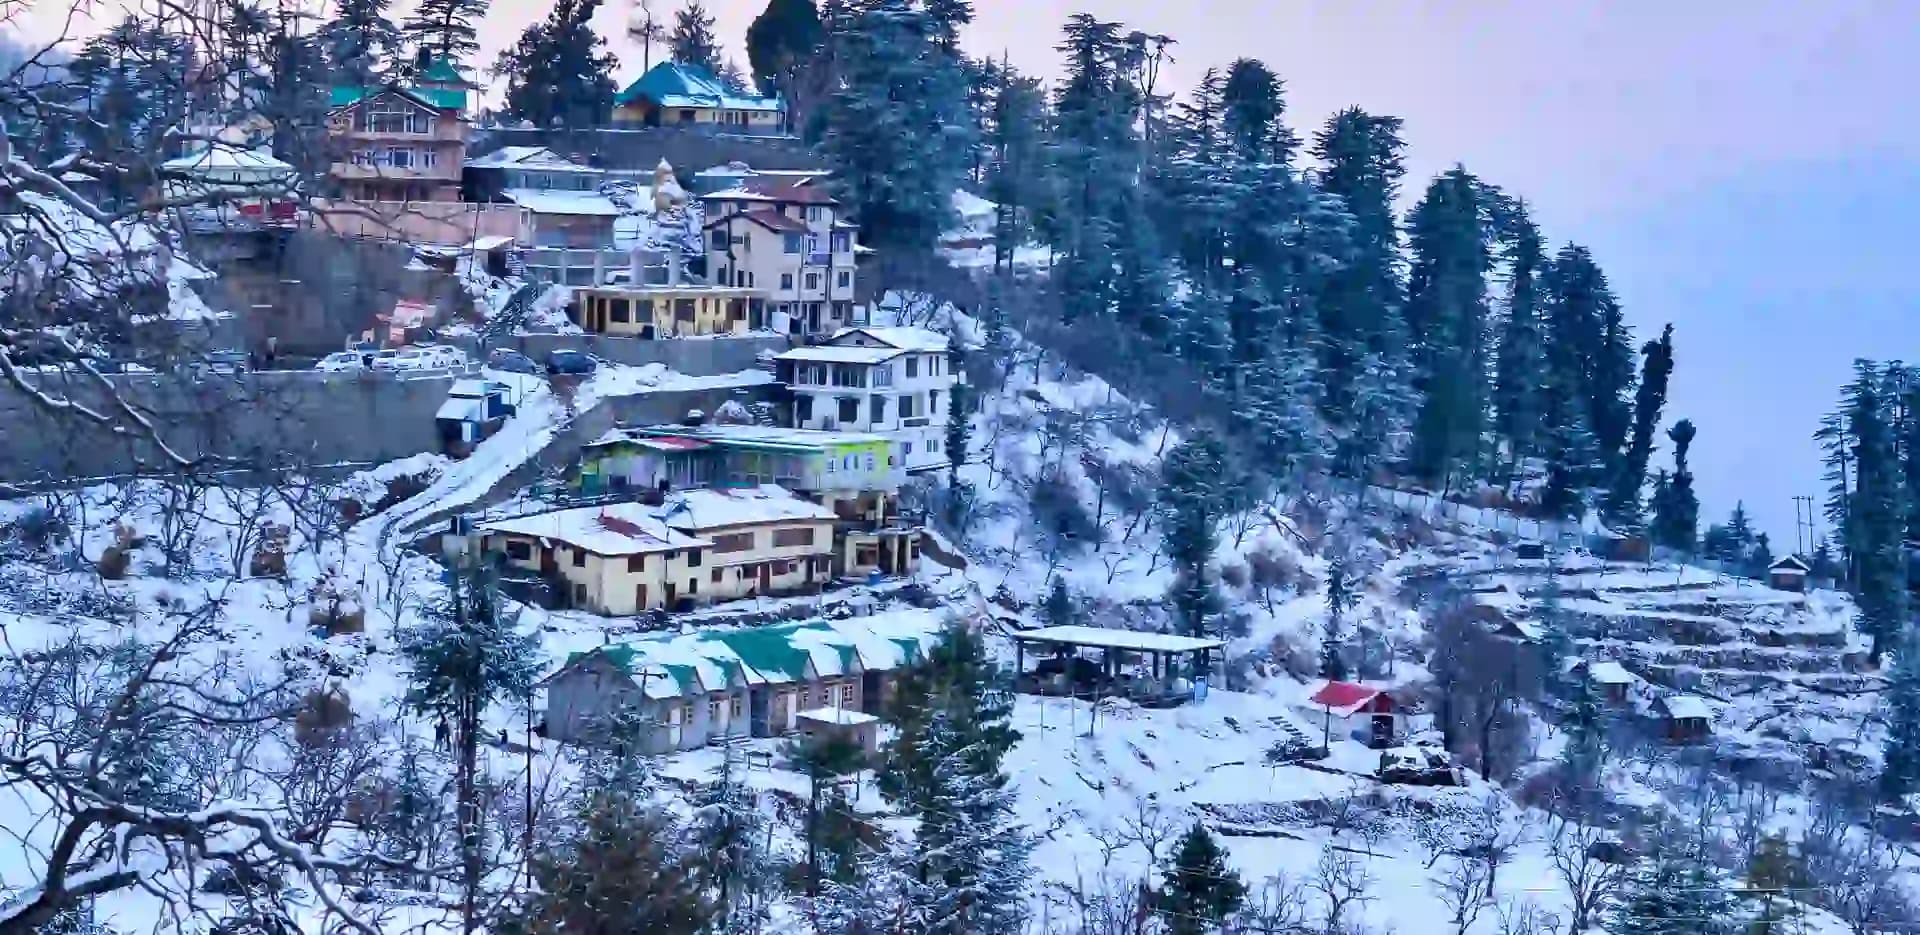 Shimla view